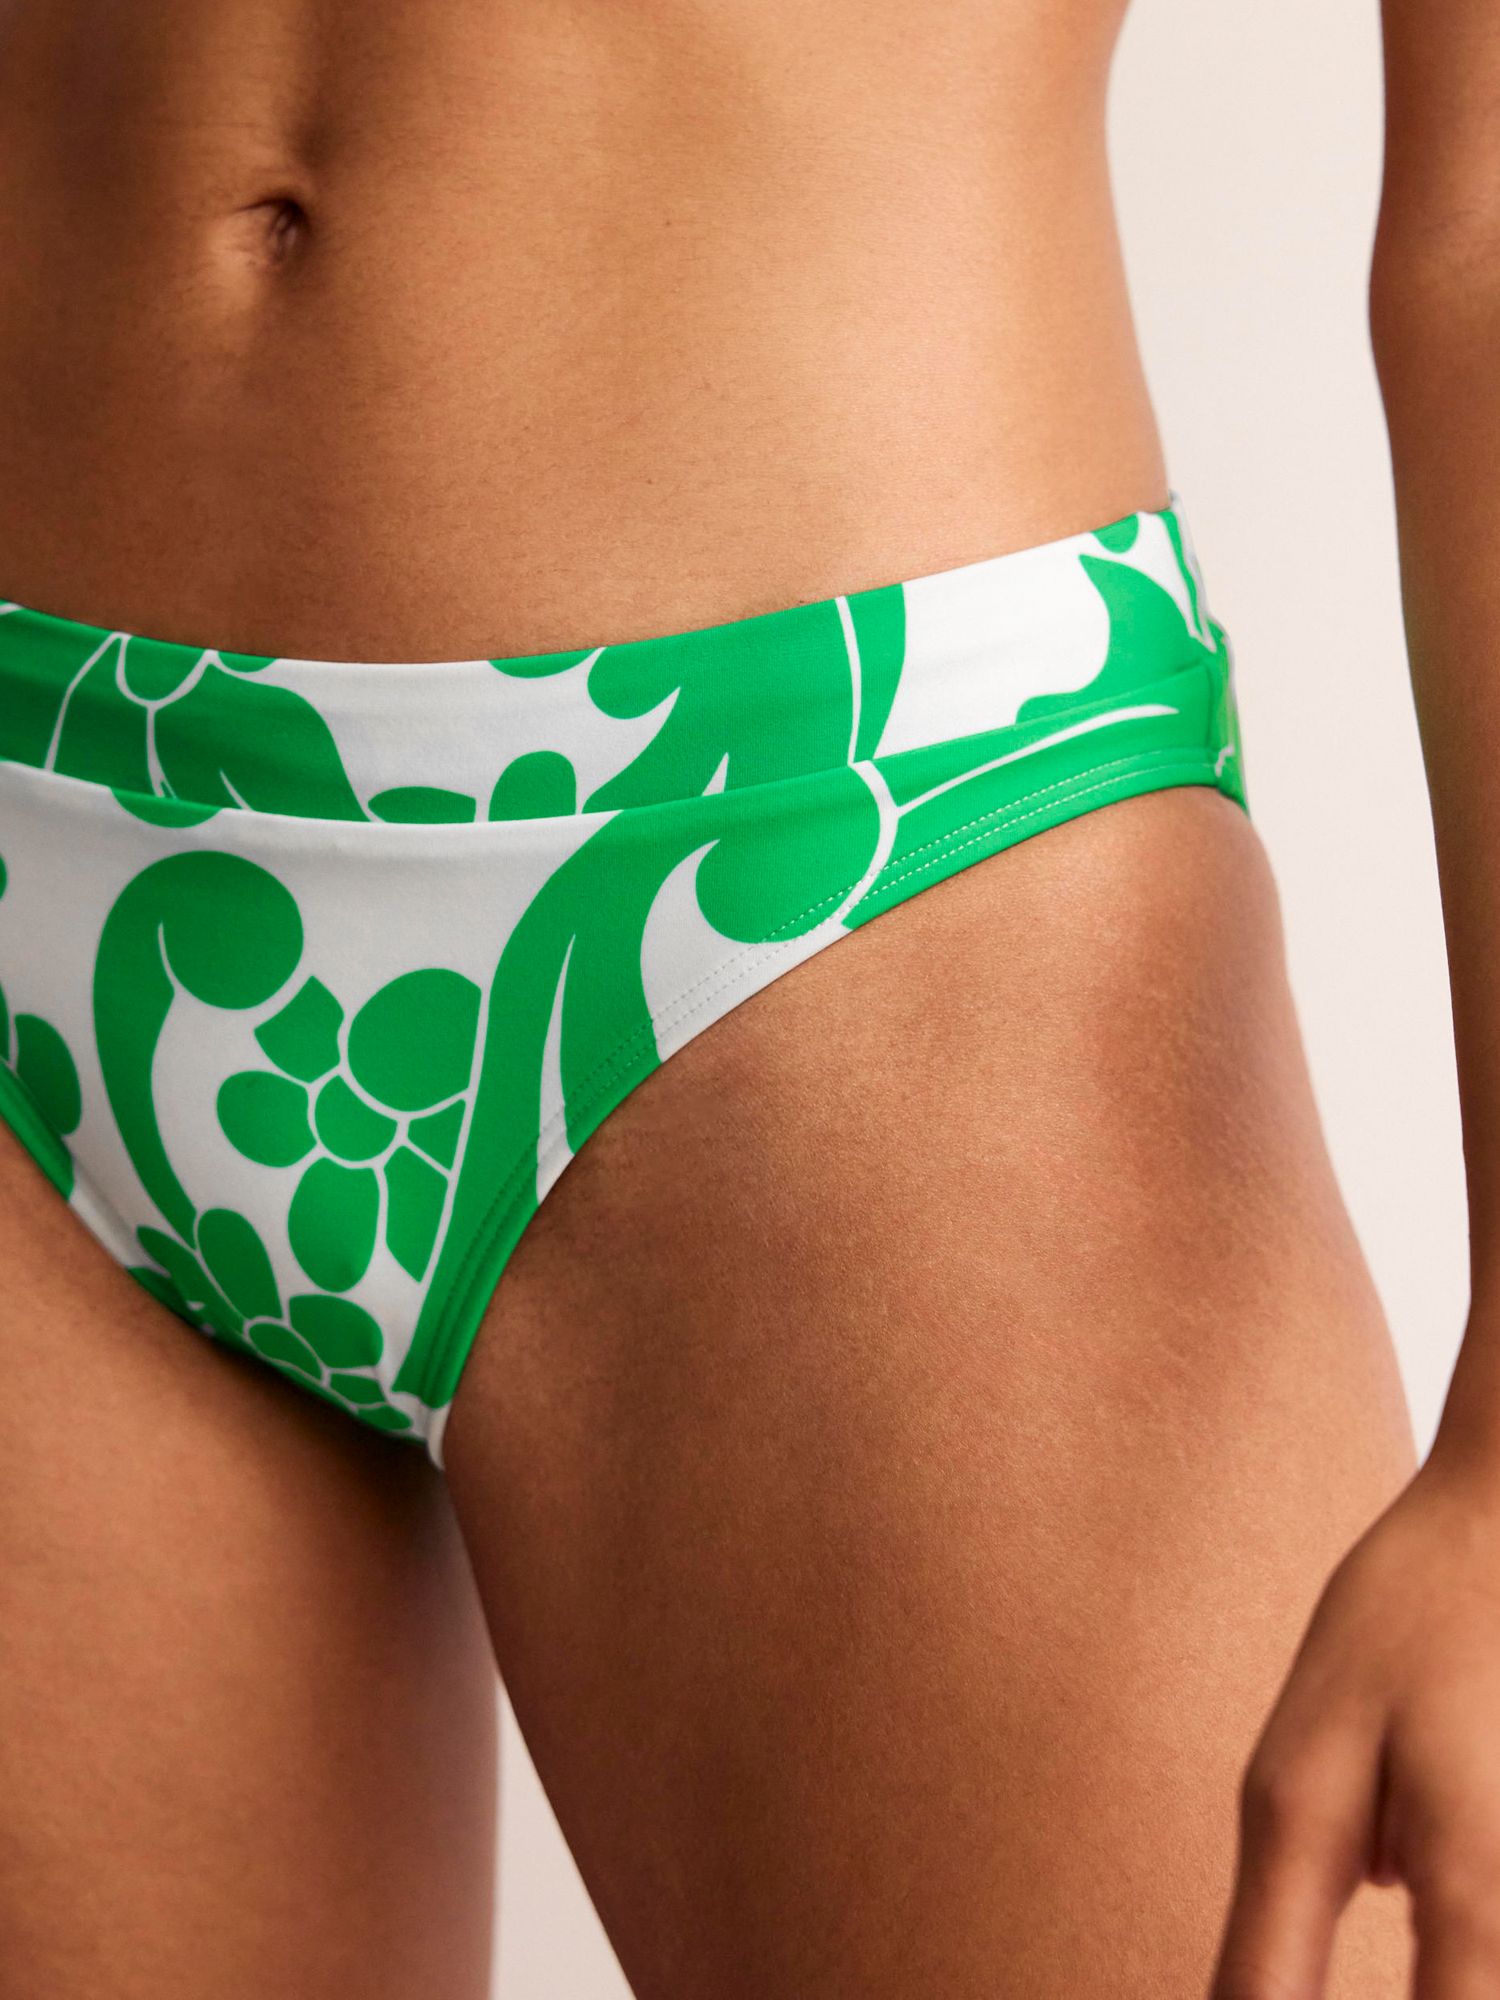 Boden Ithaca Opulent Whirl Print Bikini Bottoms, Green/Multi, 8